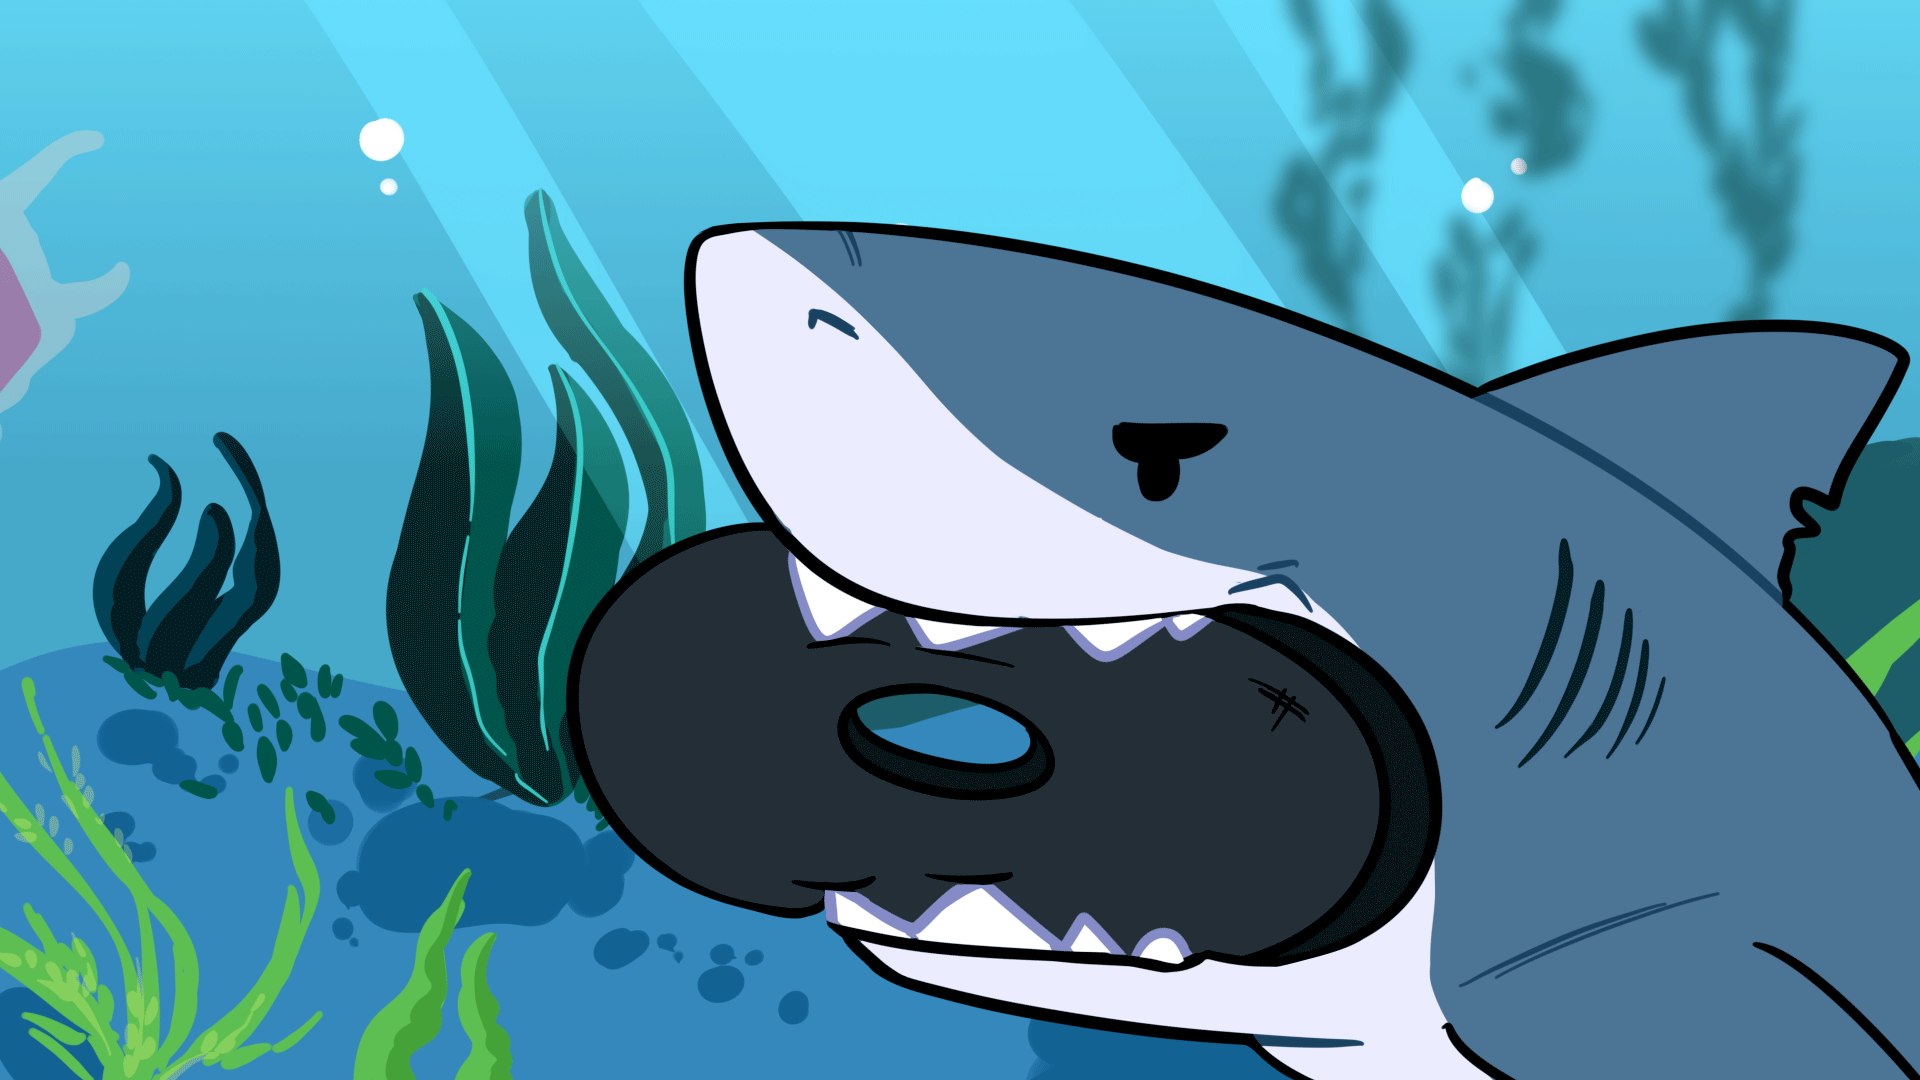 shark cartoon